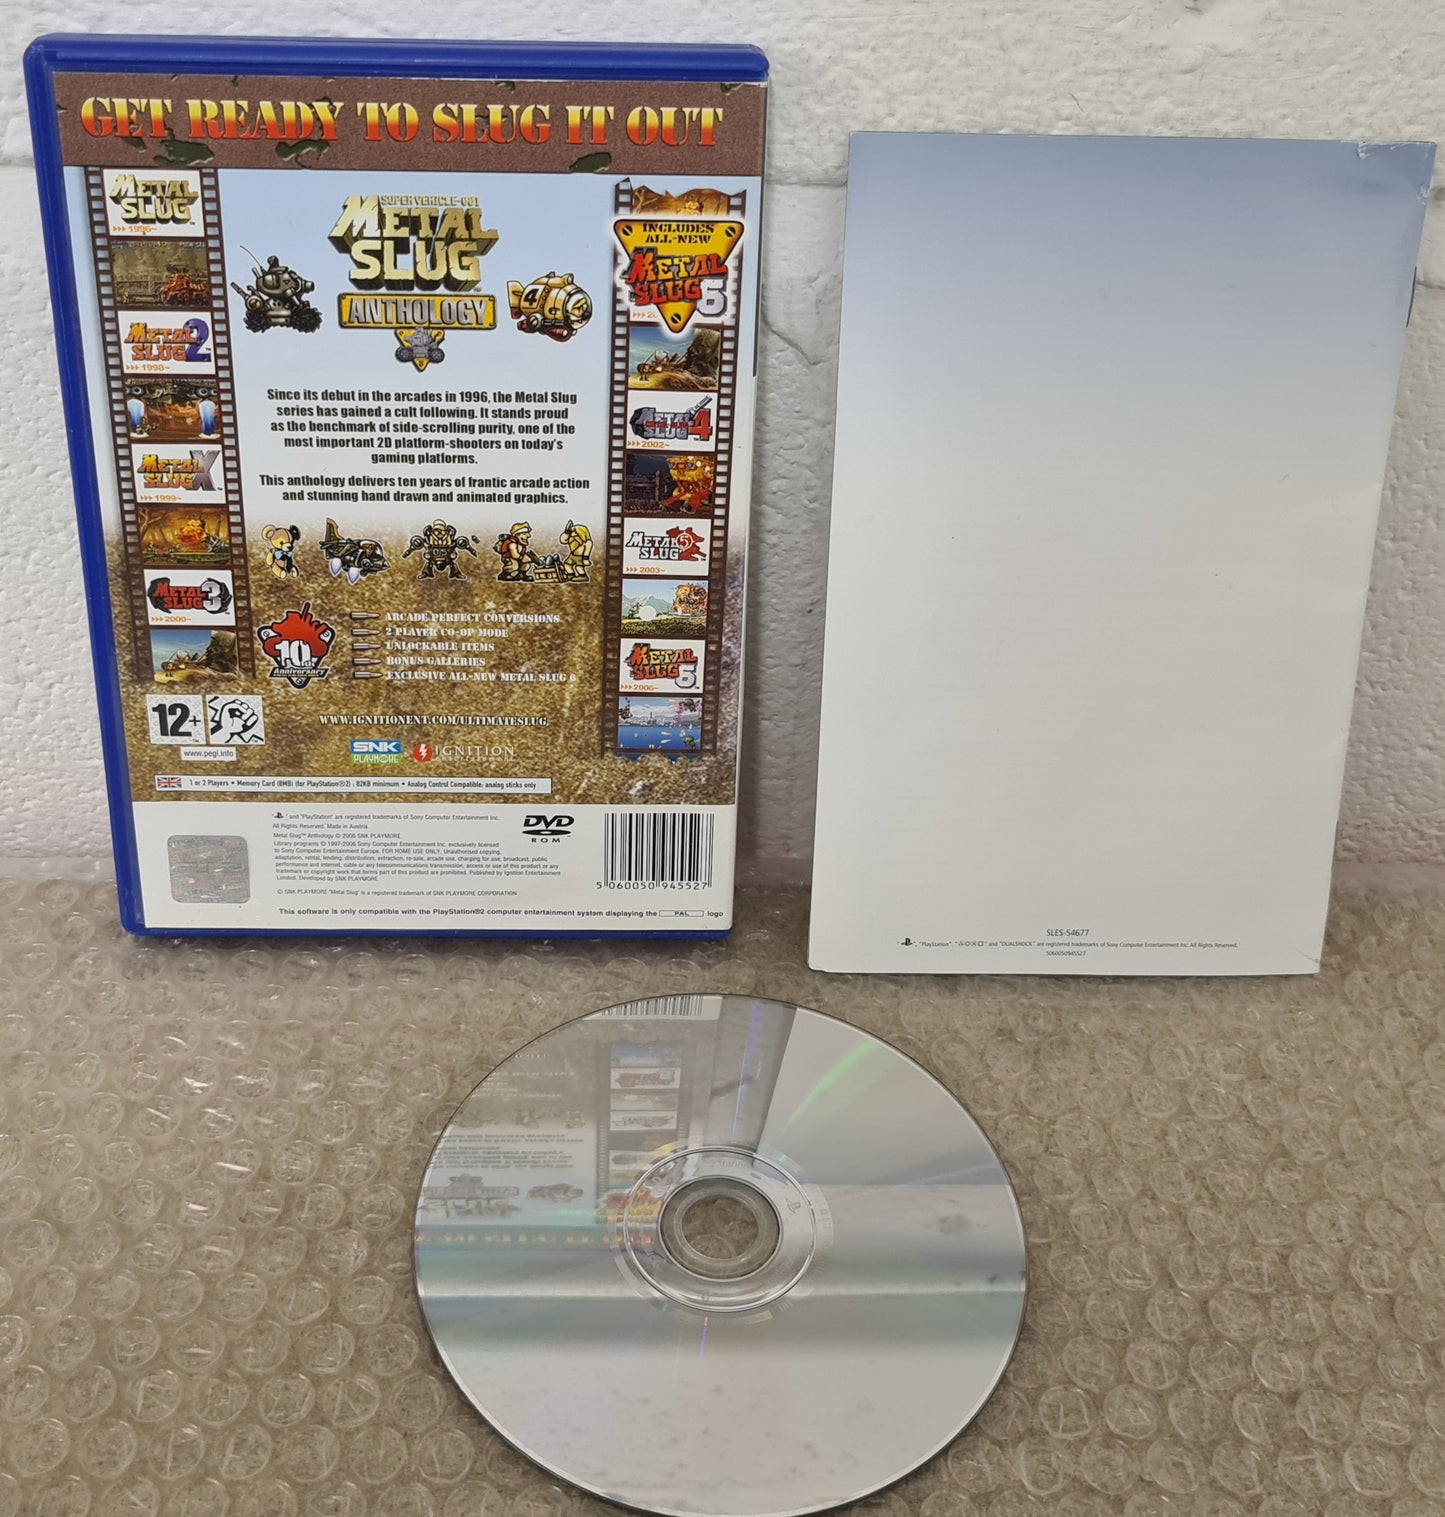 Metal Slug Anthology Sony Playstation 2 (PS2) Game